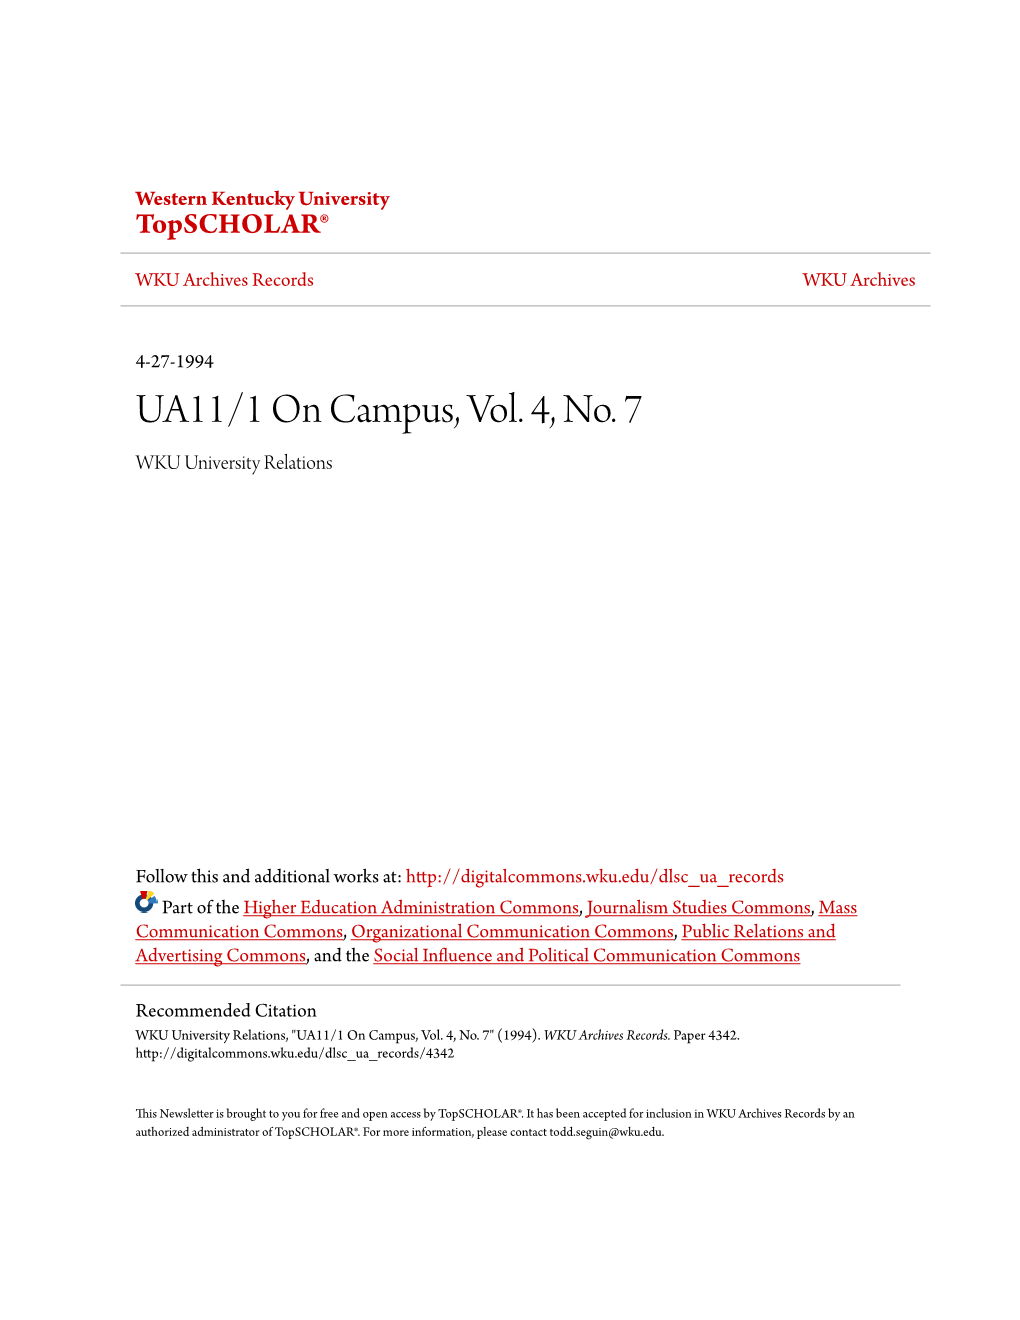 UA11/1 on Campus, Vol. 4, No. 7 WKU University Relations